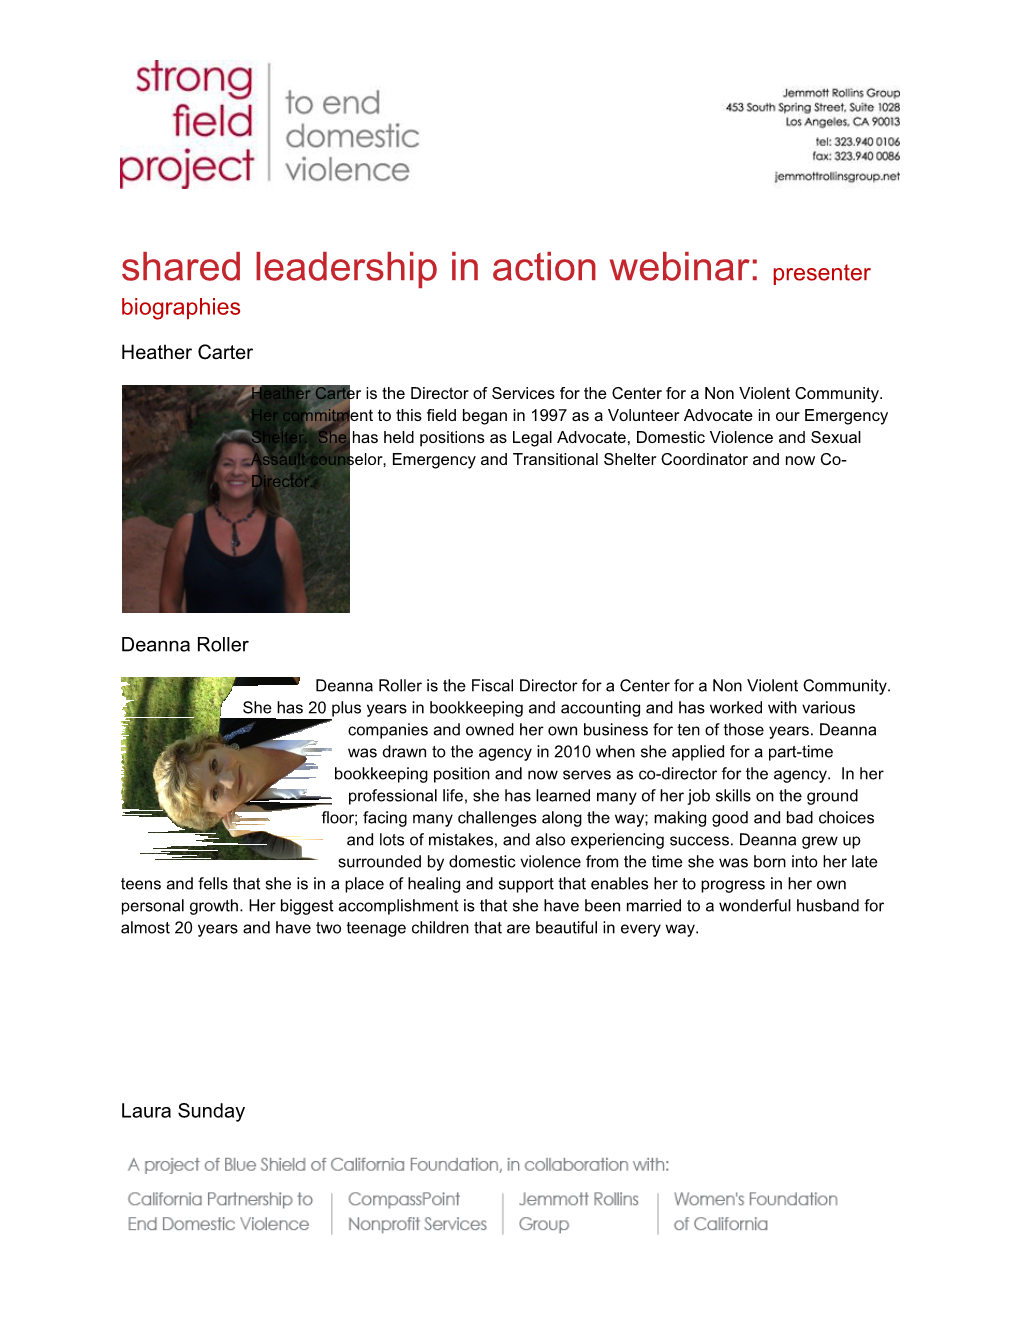 Shared Leadership in Action Webinar: Presenter Biographies